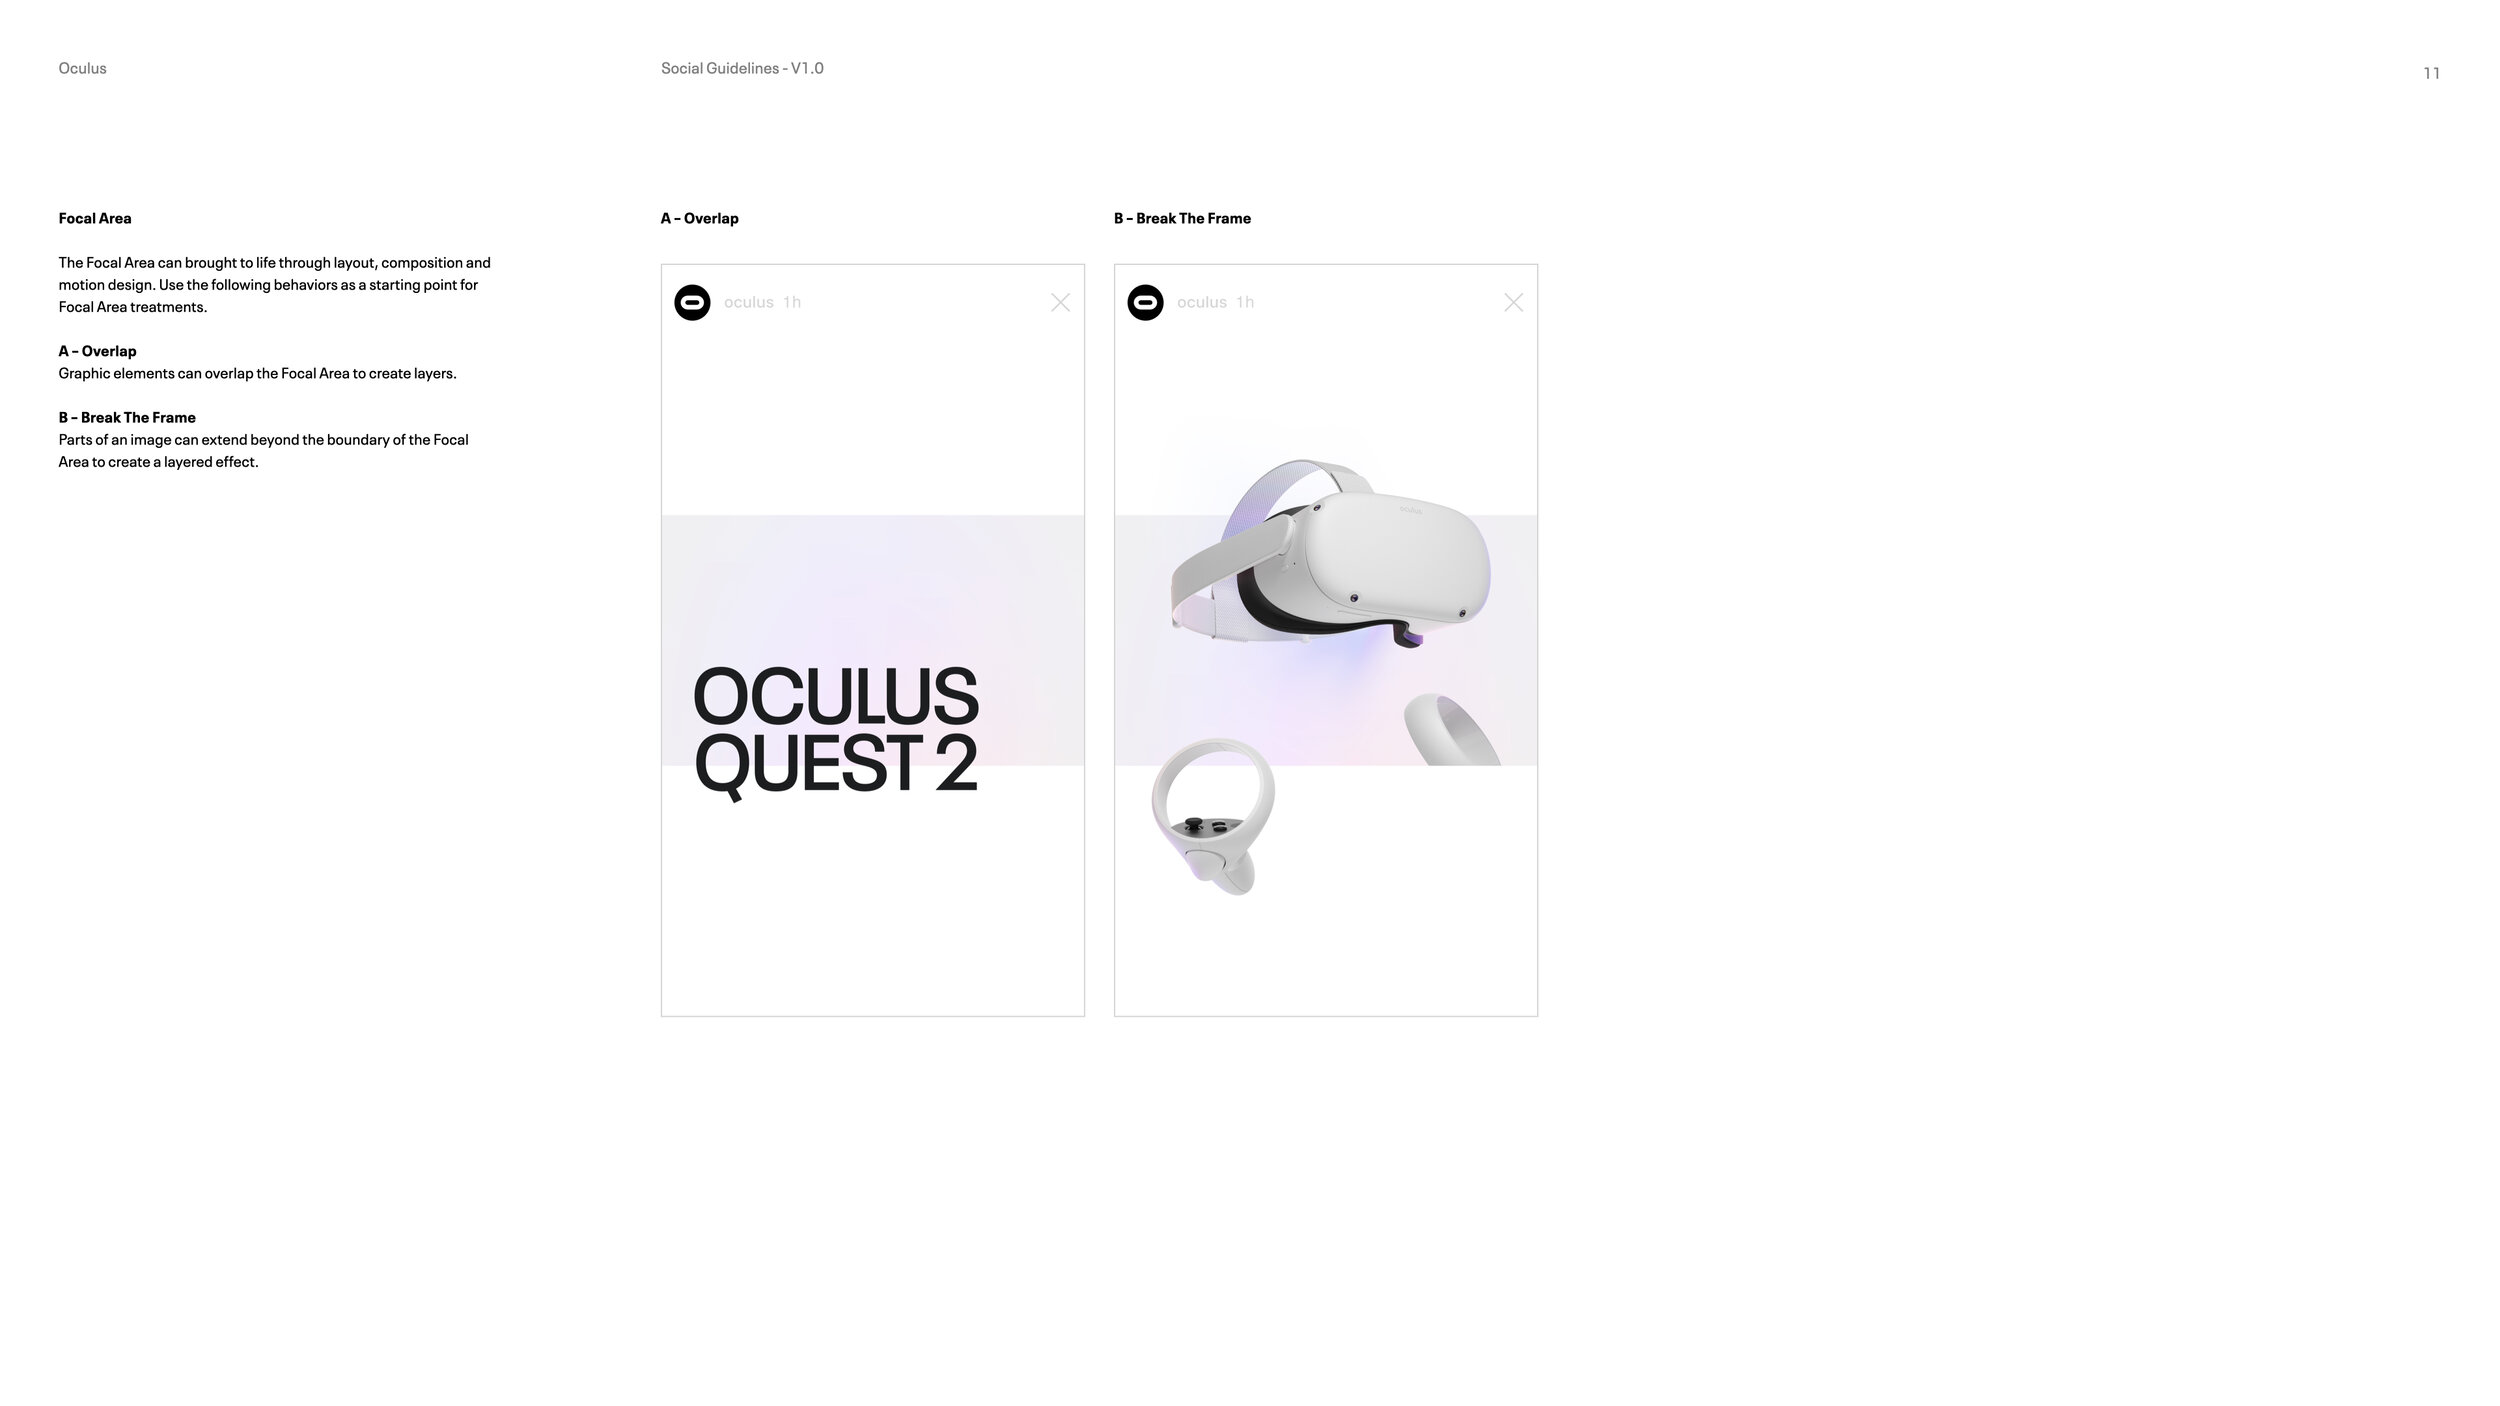 2020_10_13_Oculus_Social_Guidelines (1).011.jpeg